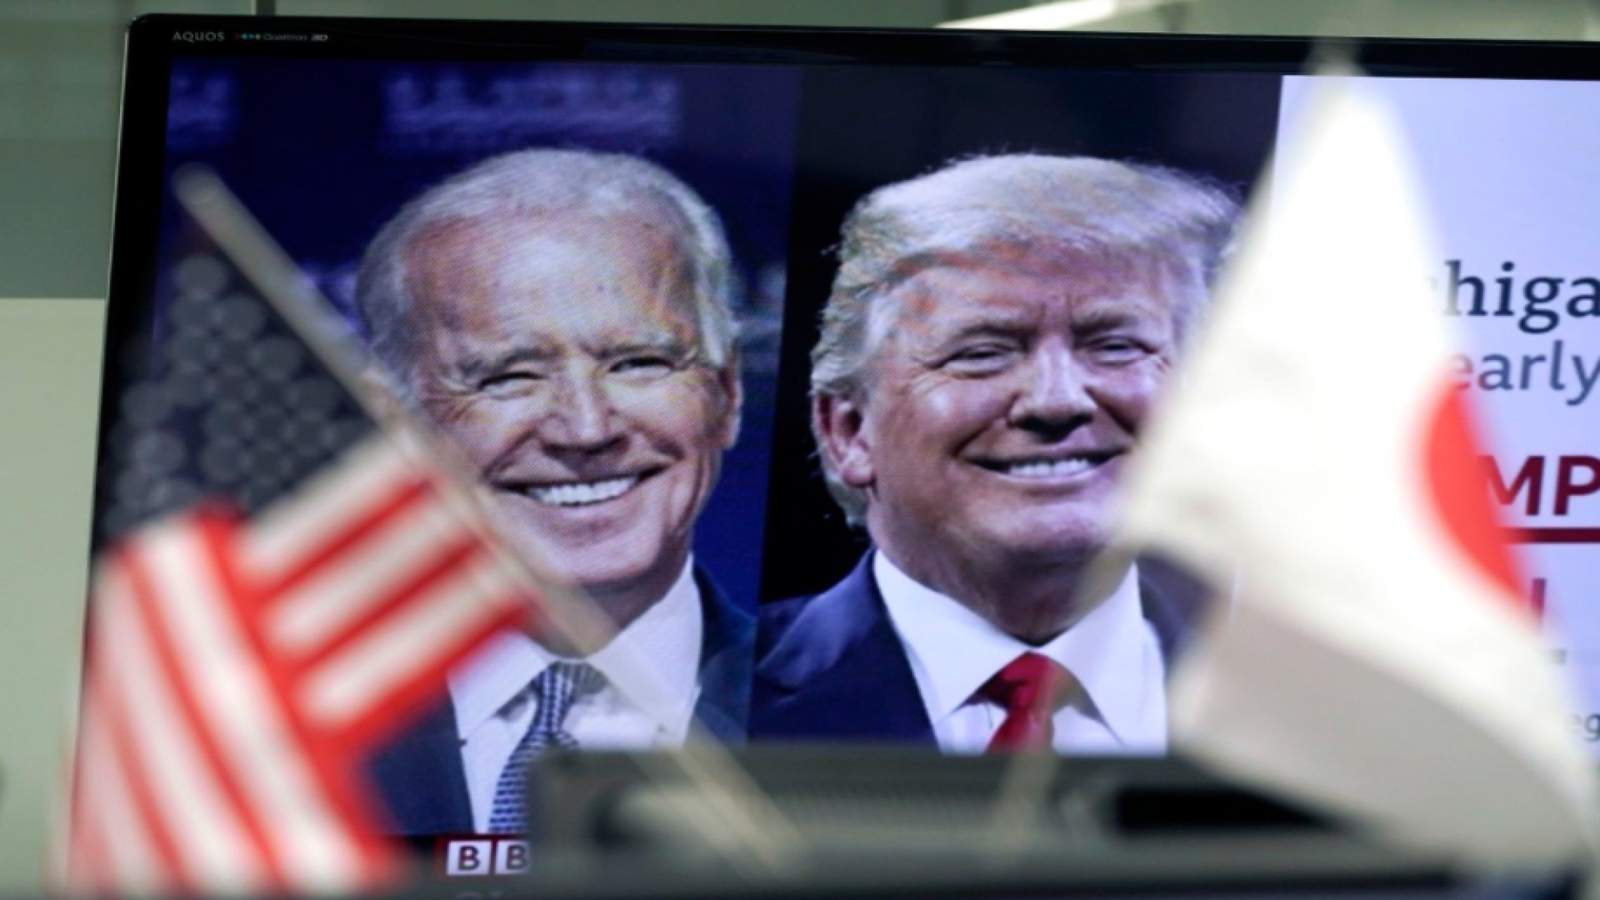 UPDATES: Biden wins Michigan as Trump sues; presidency remains in flux